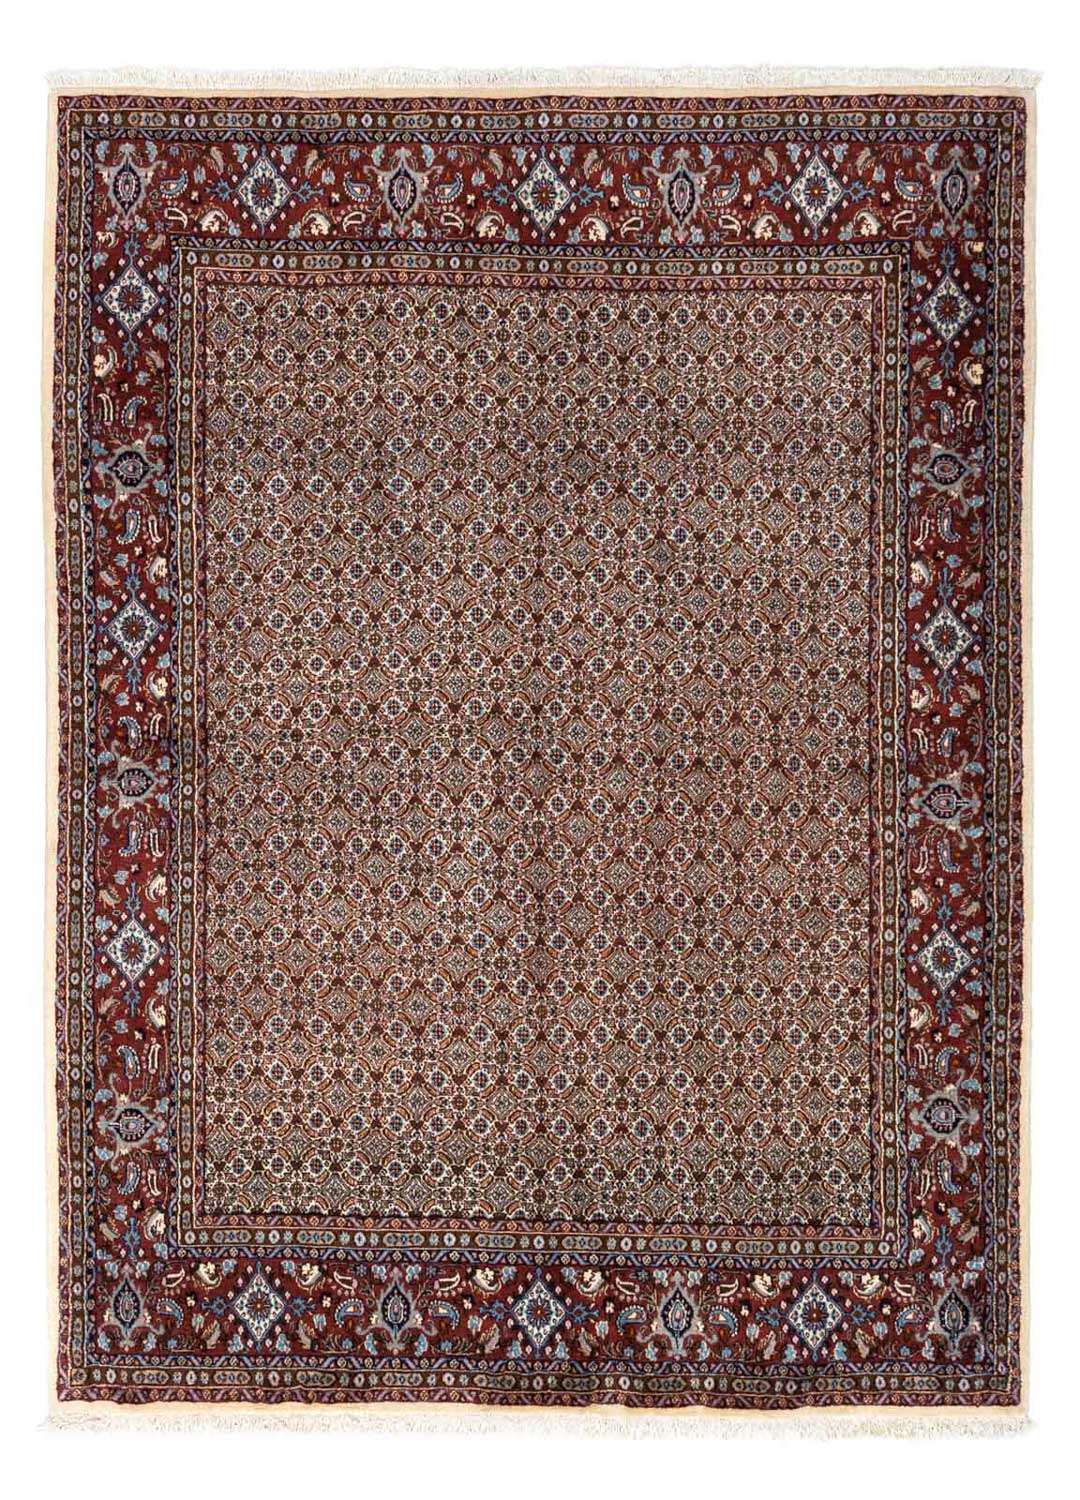 Persisk tæppe - Classic - 235 x 174 cm - beige